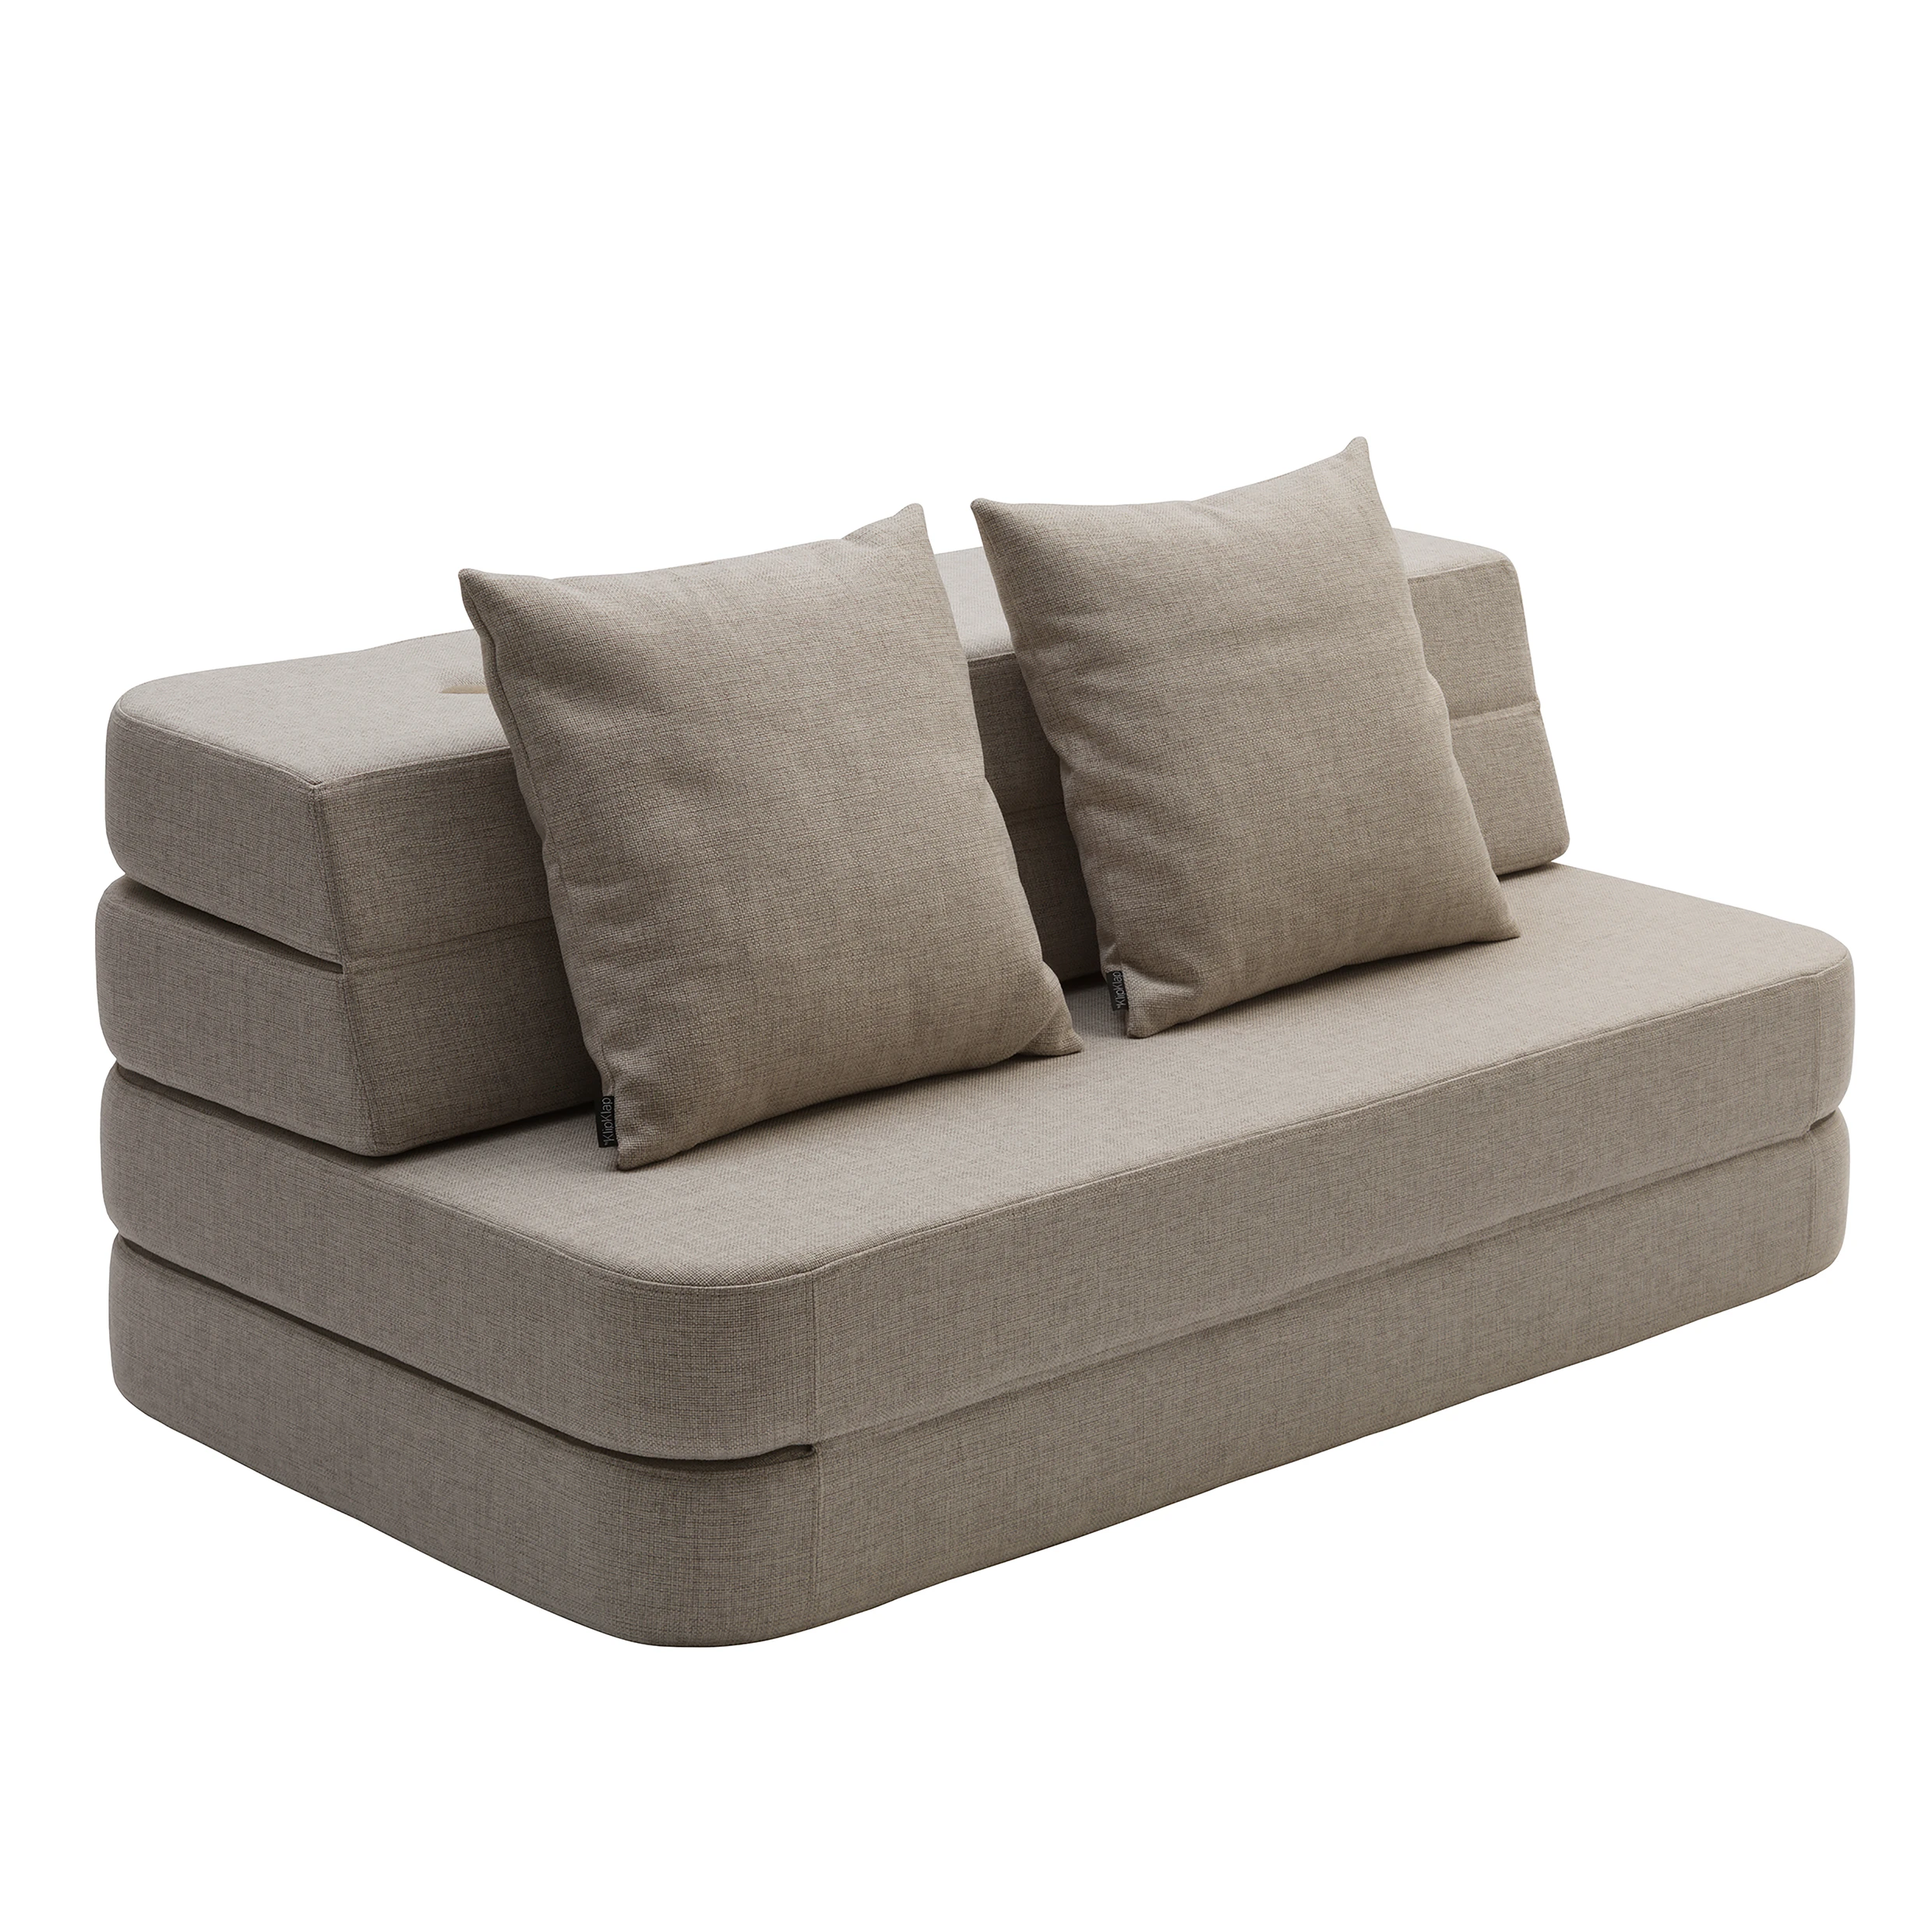 Klapp-Sofa "KK 3 Fold Sofa XL soft" (140 cm) - Beige / Sand